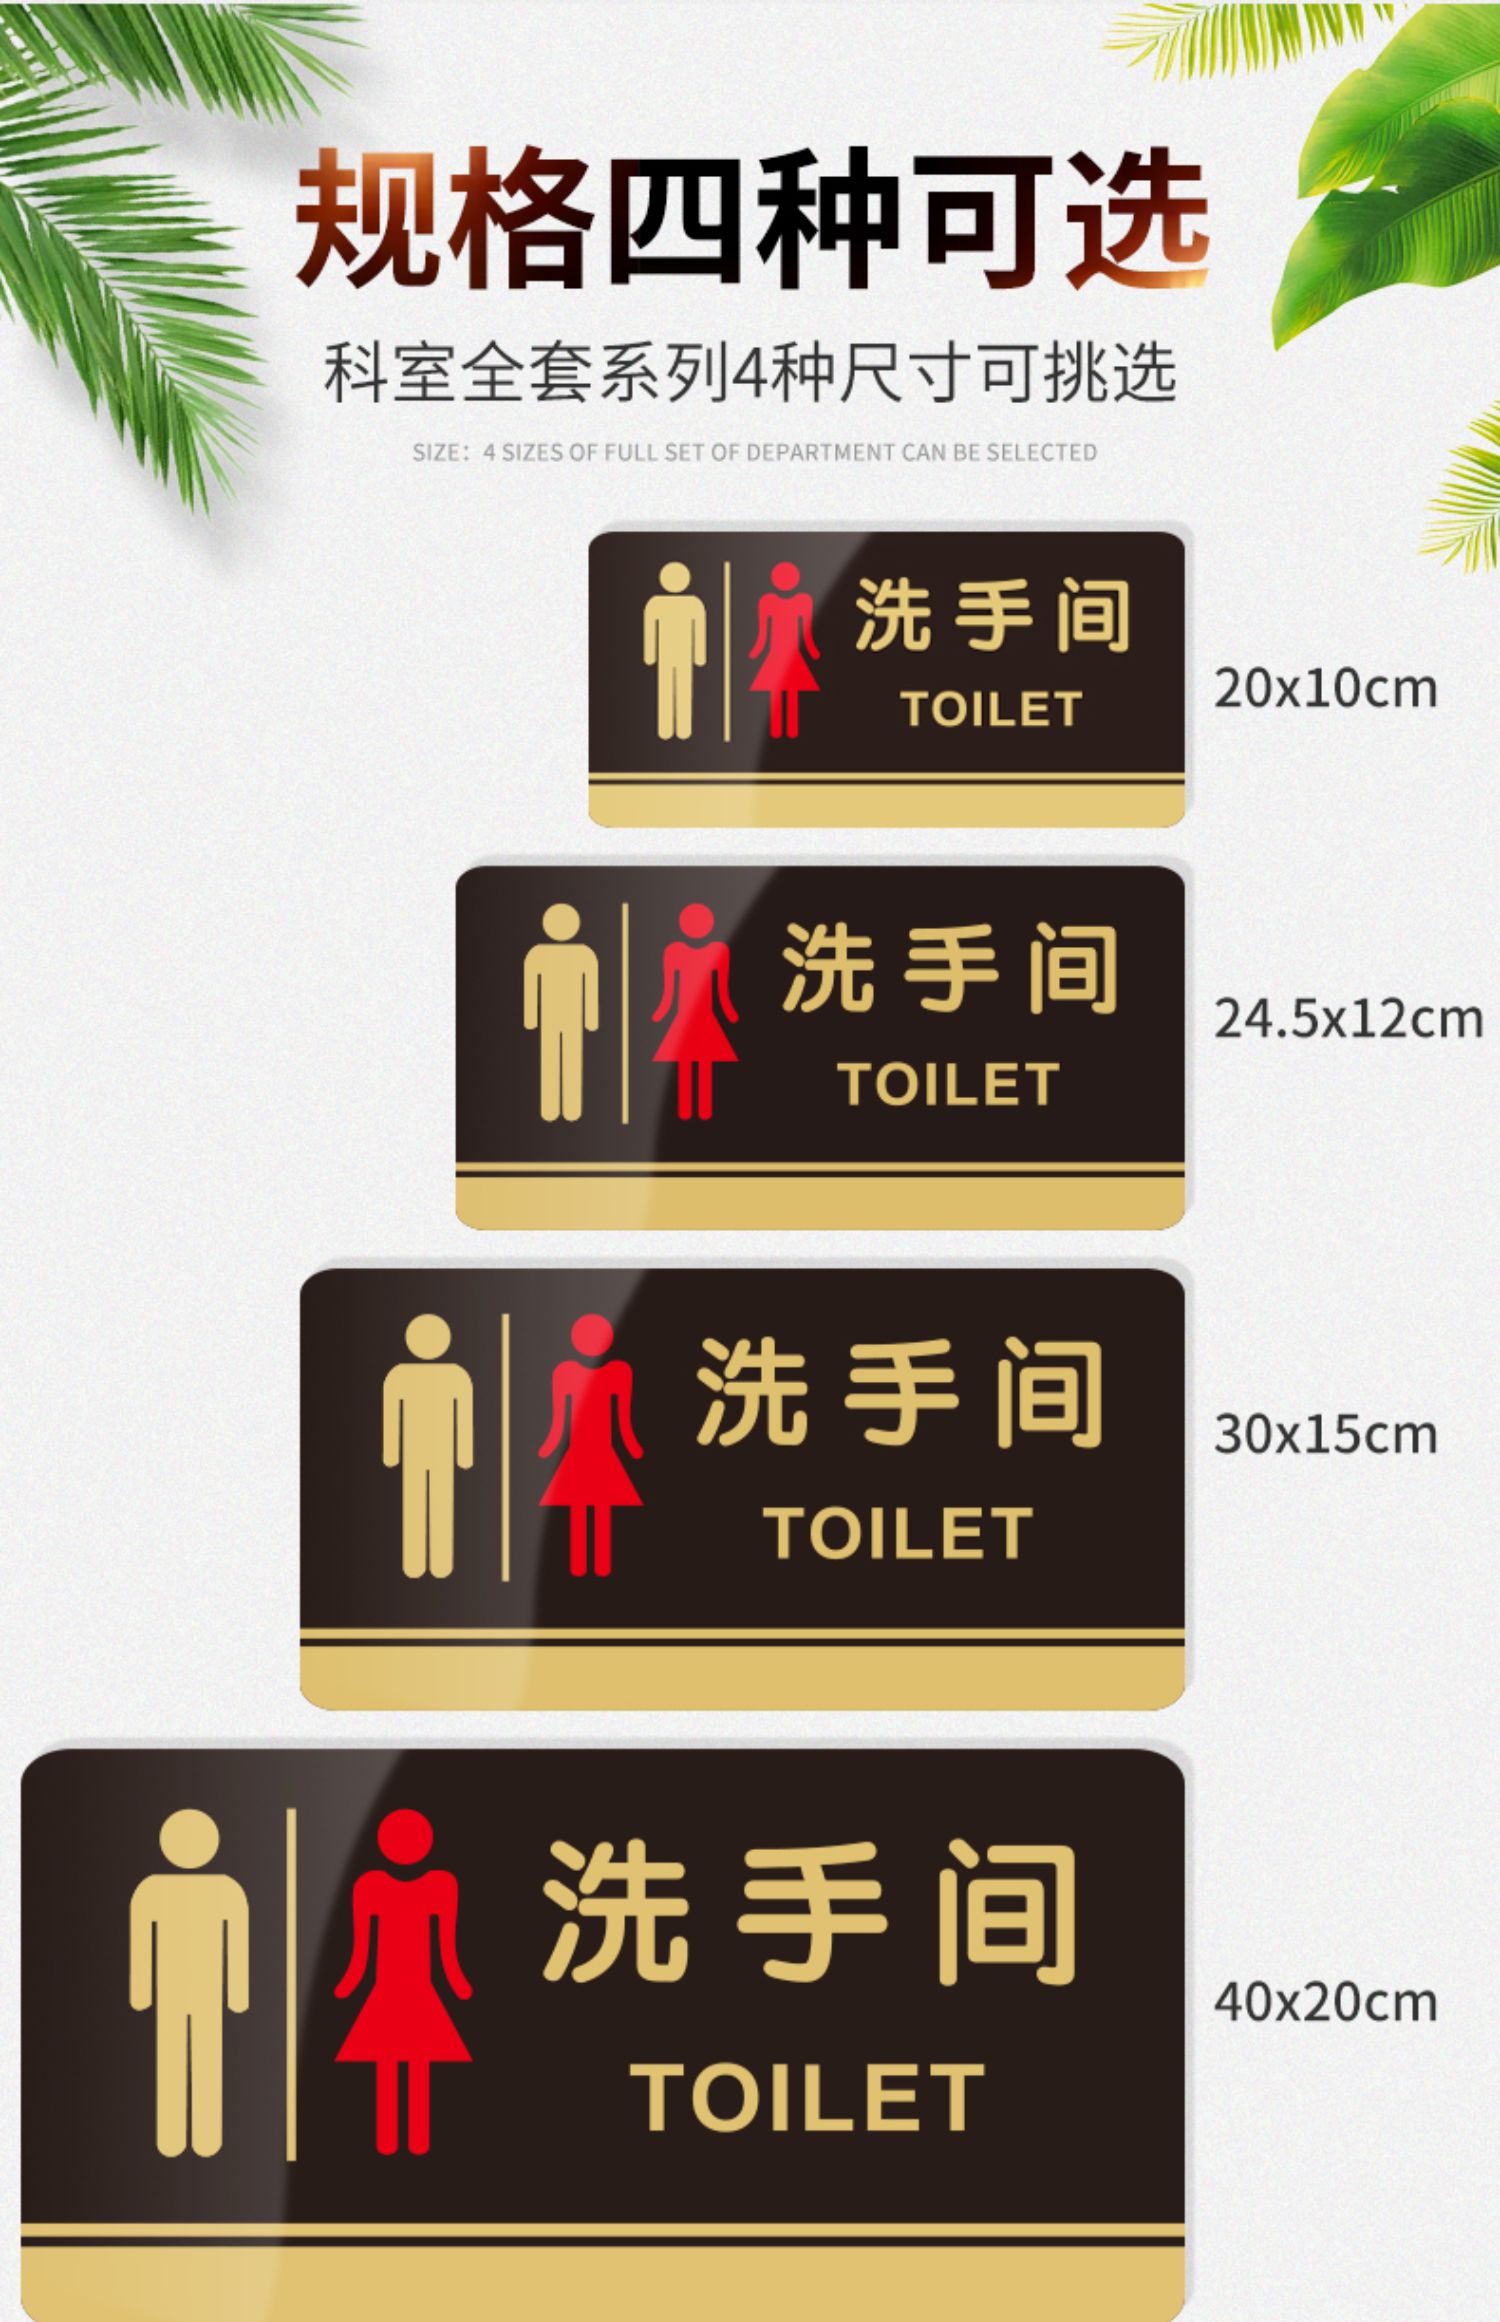 safebet亚克力洗手间指示牌卫生间标识男女厕所禁止吸烟提示牌办公室